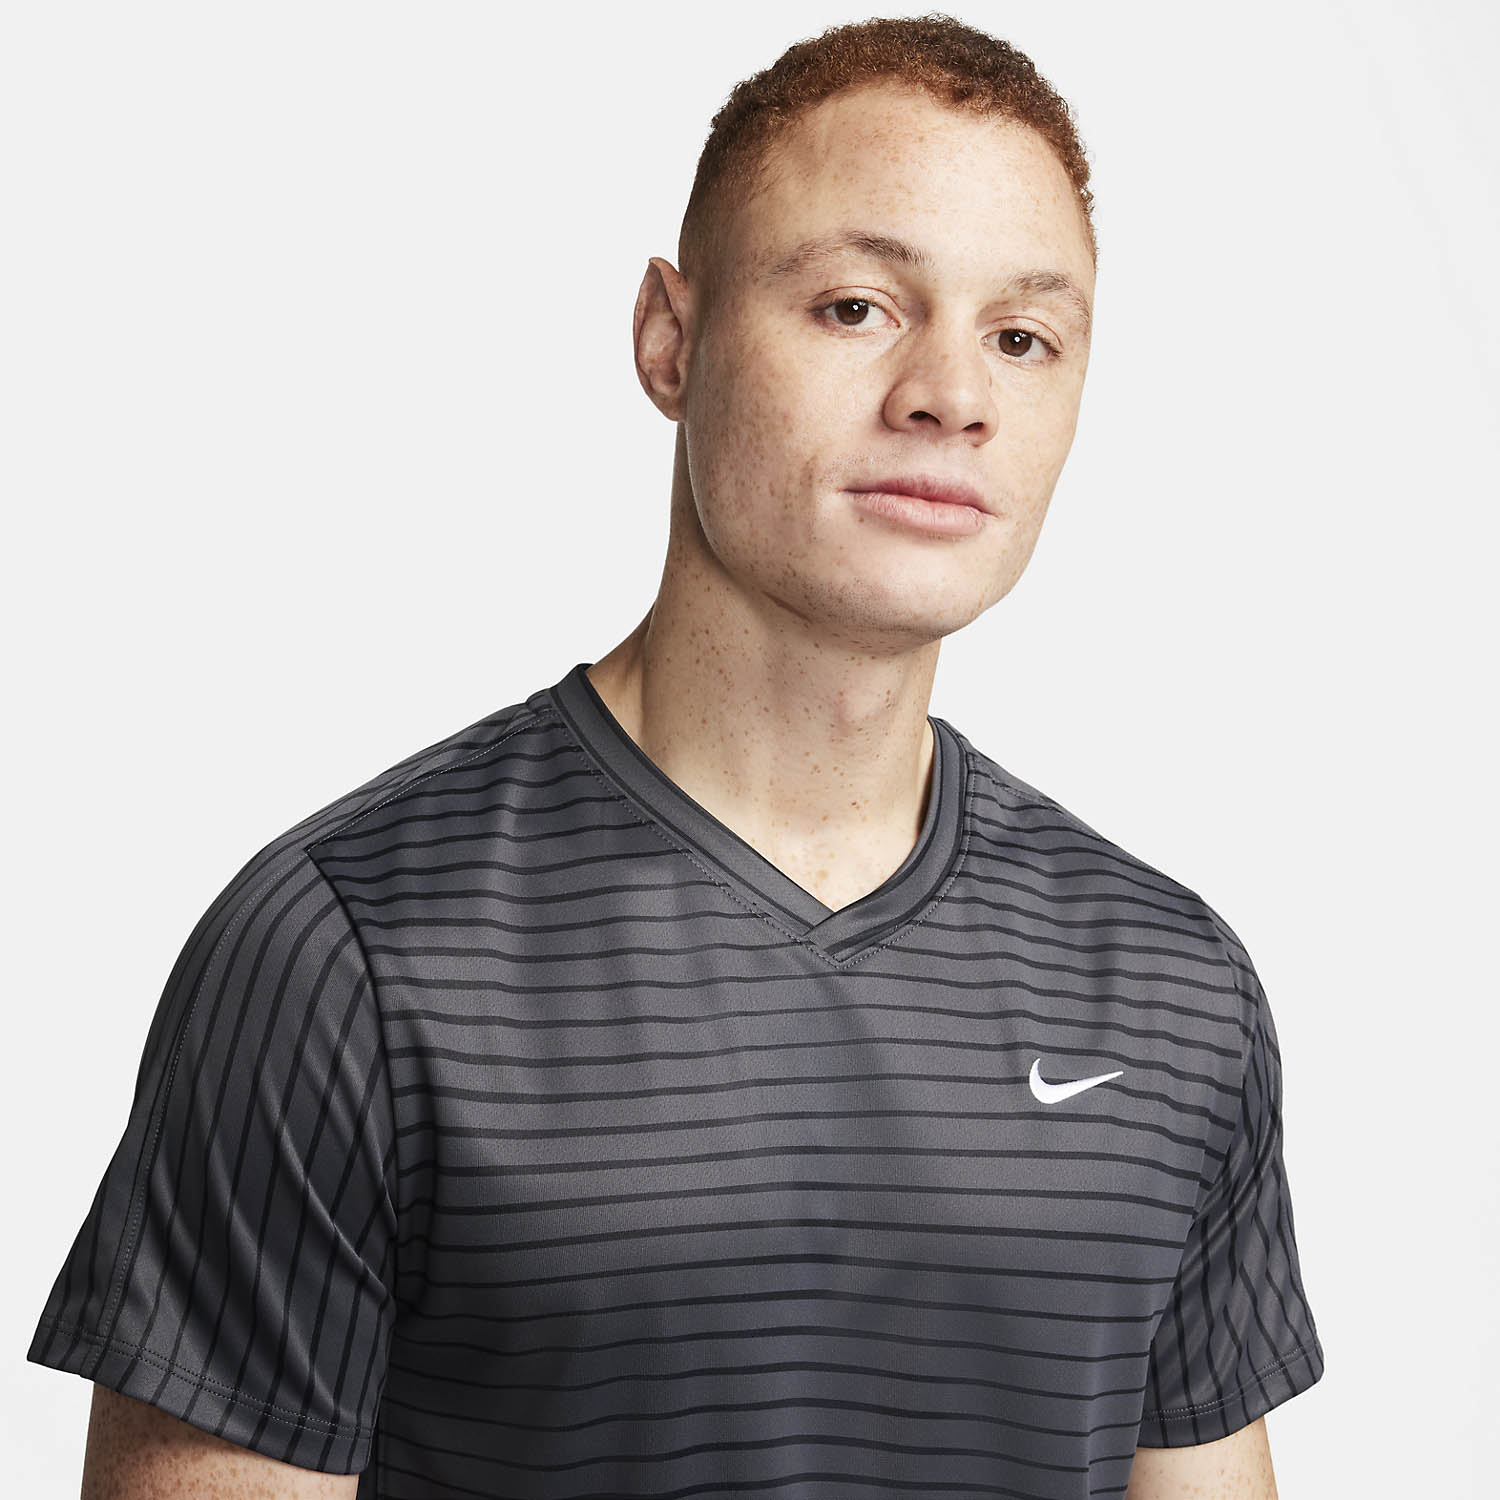 Nike Dri-FIT Victory Novelty Camiseta - Anthracite/White